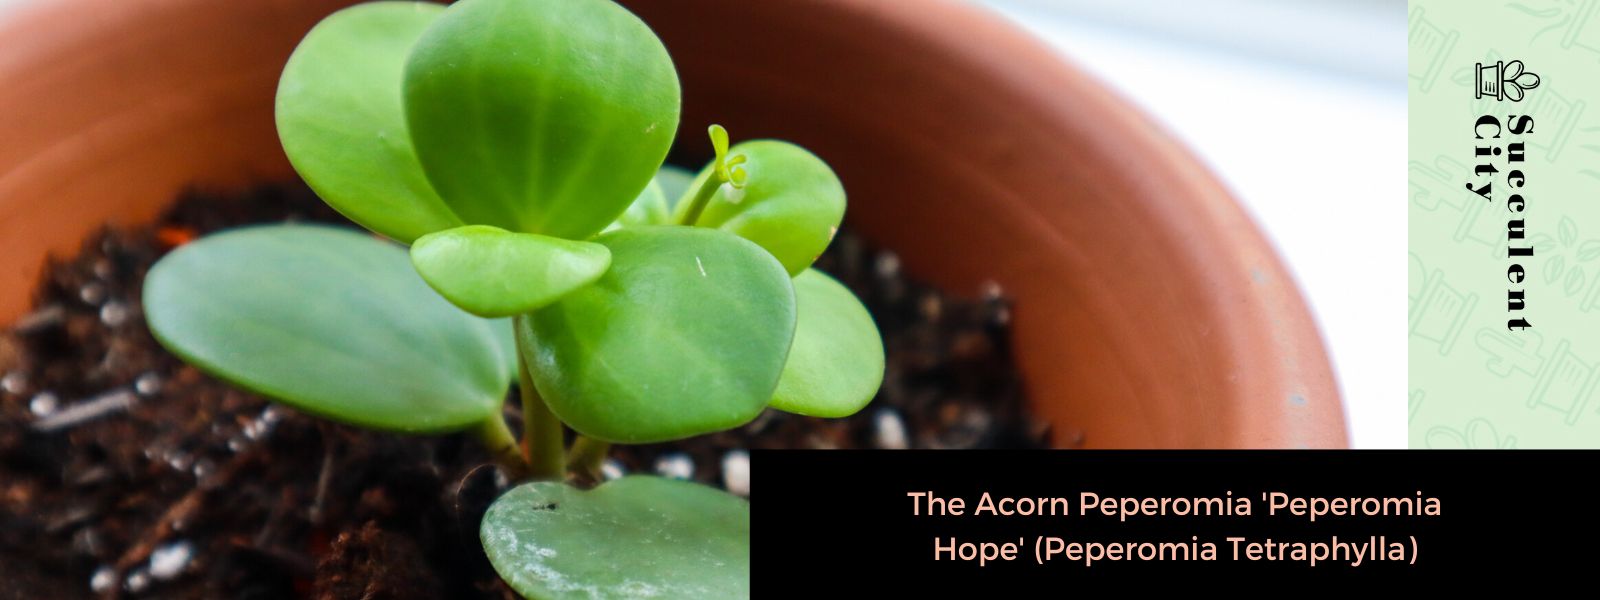 La peperomia de bellota 'Peperomia Hope' (Peperomia tetraphylla)